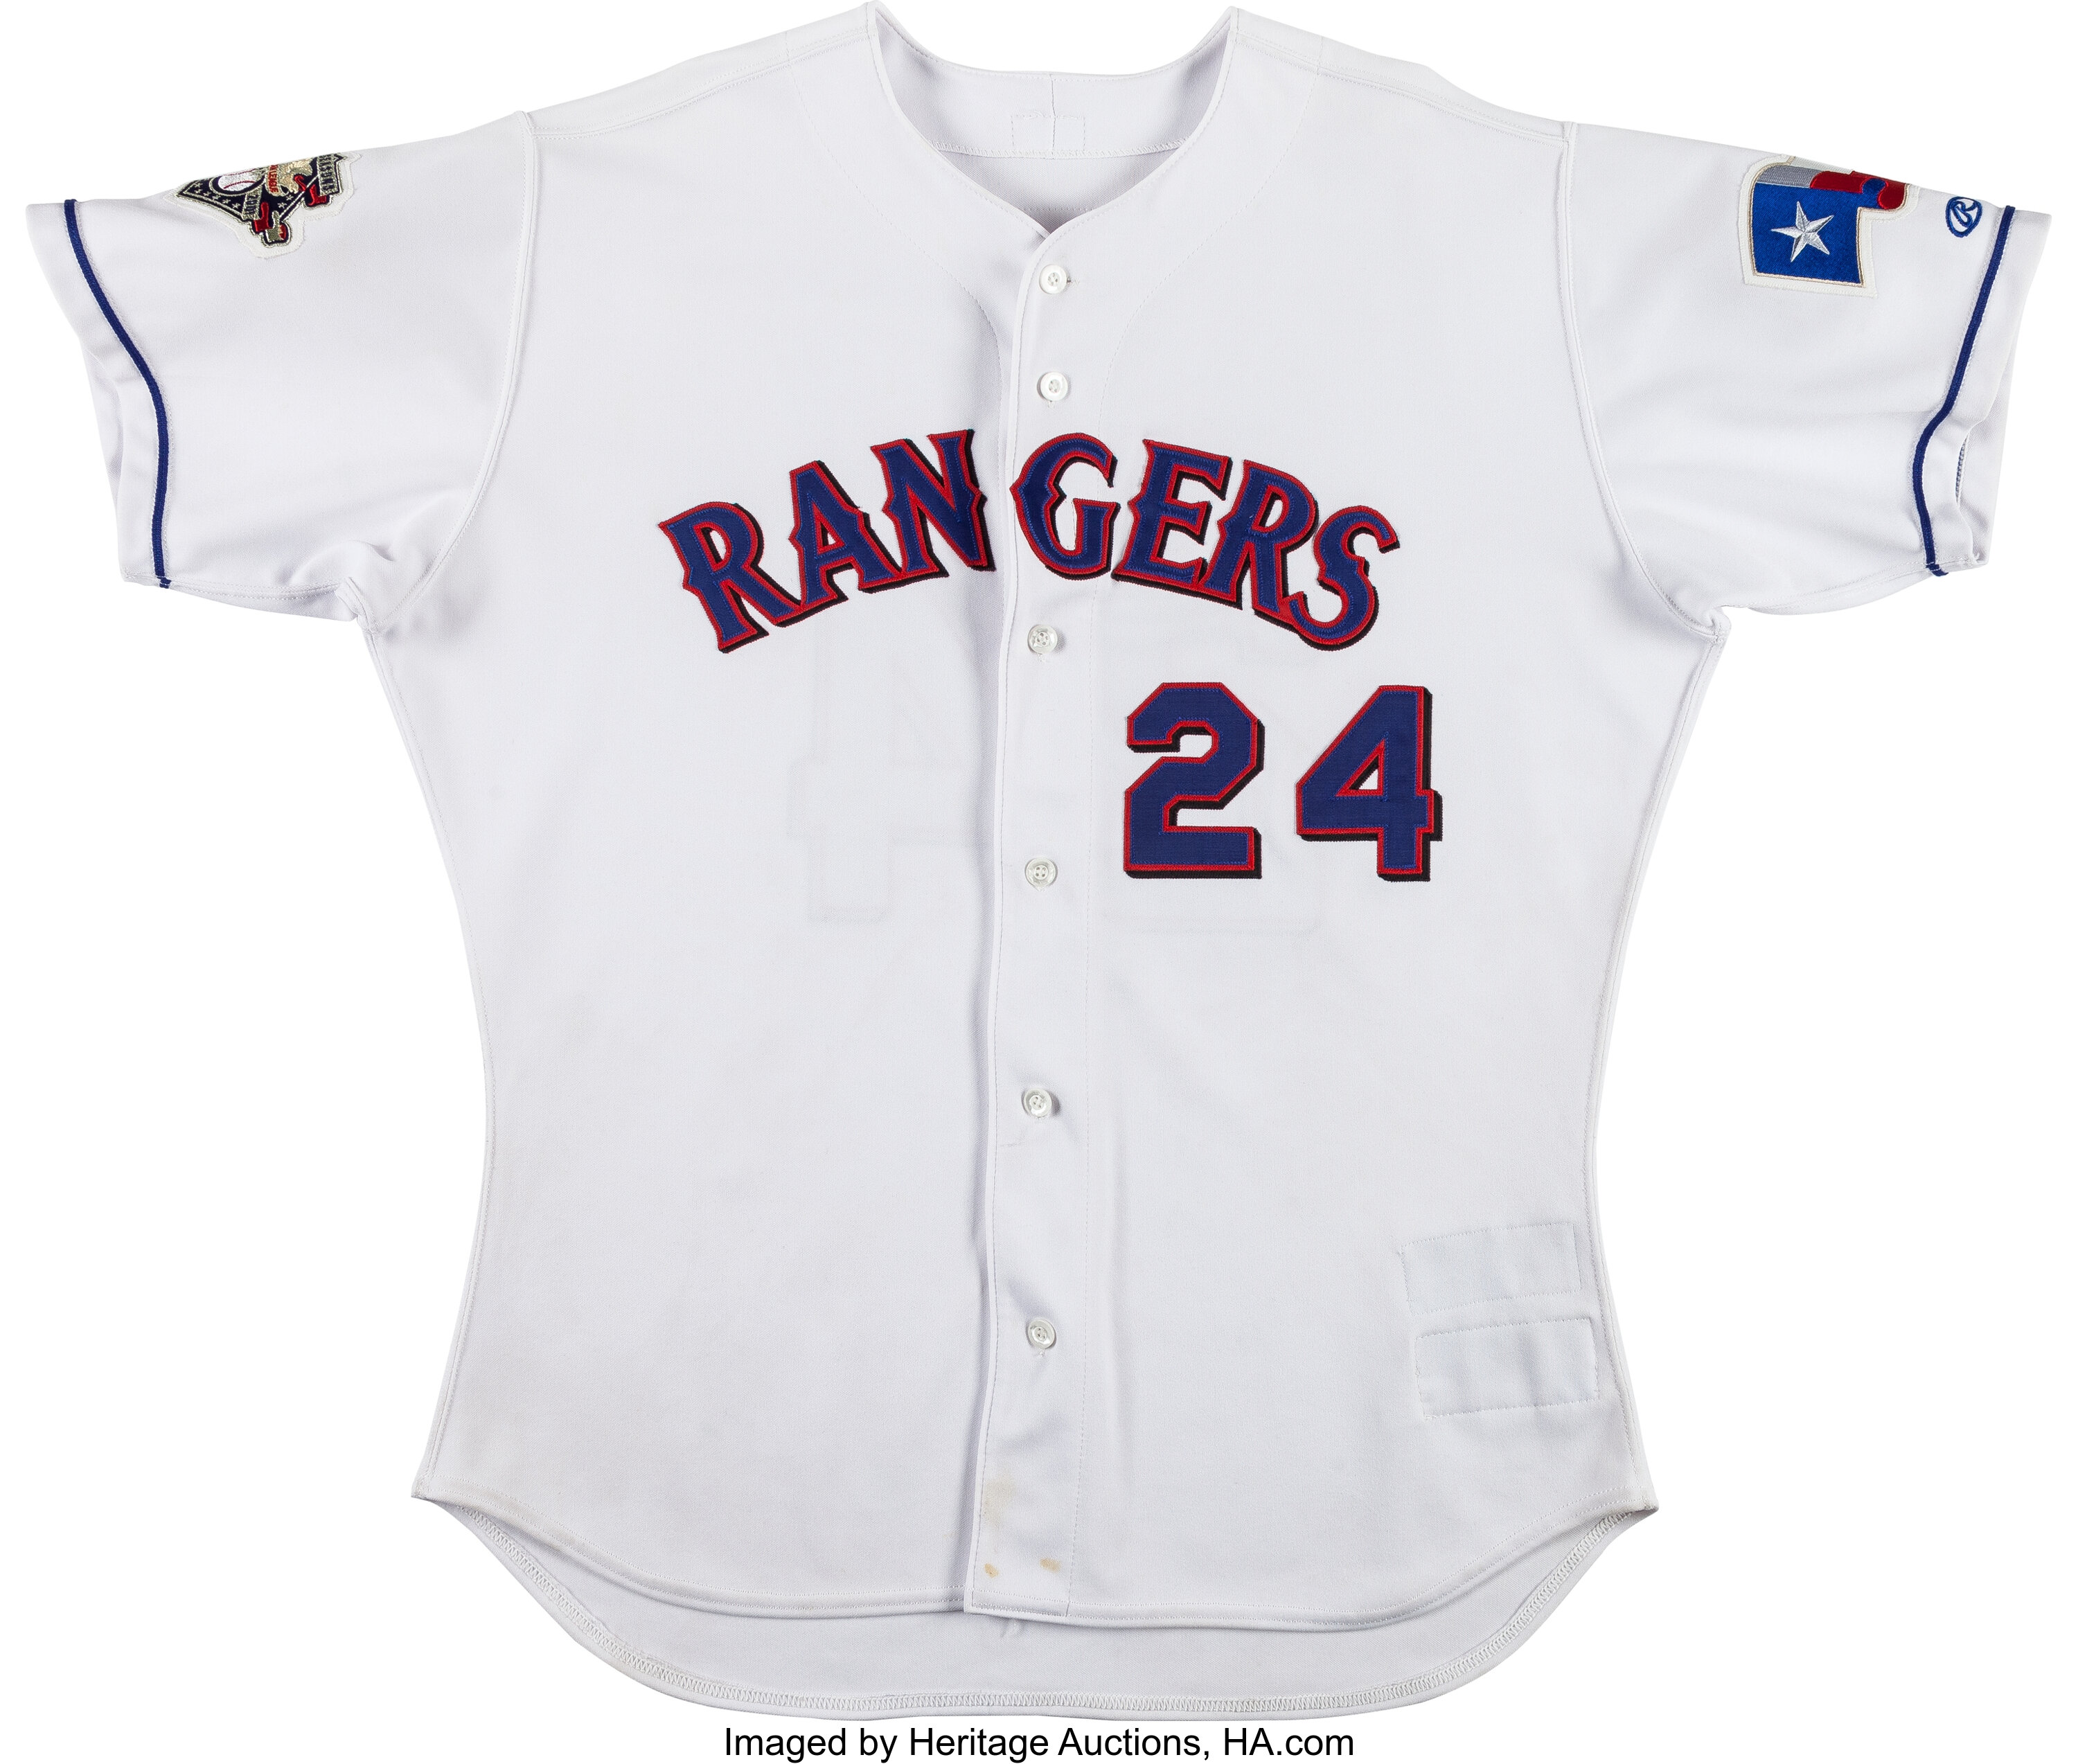 Personalized Texas Rangers Baseball Jersey w/ Bugs Bunny - Pullama